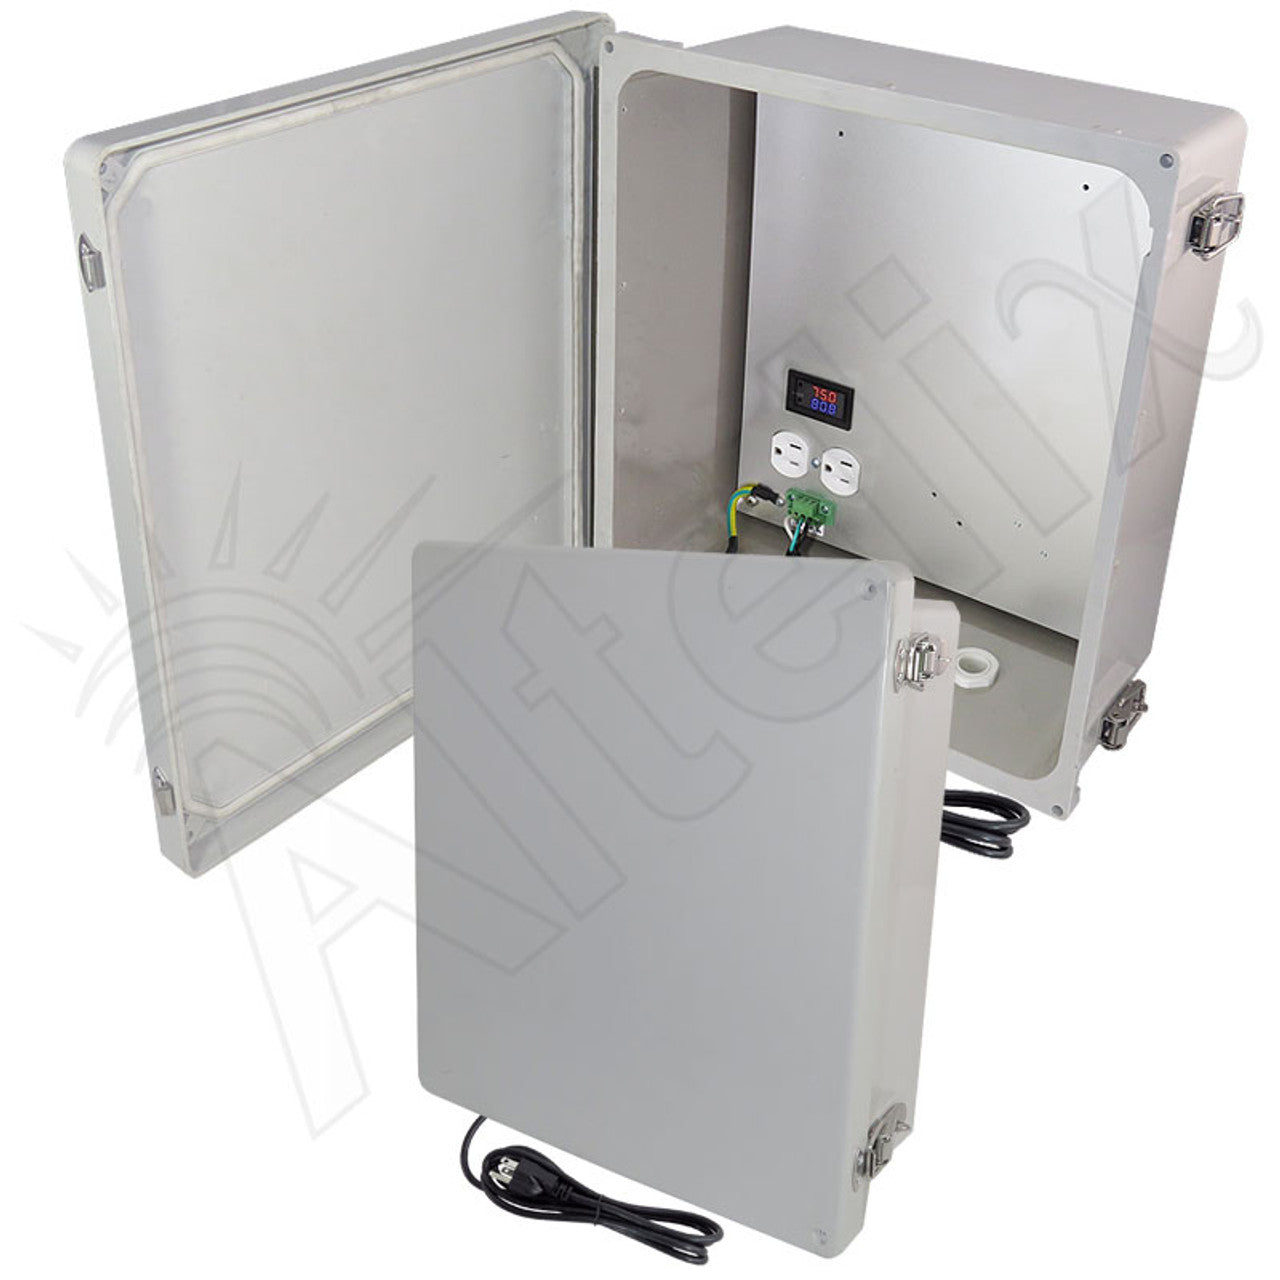 Altelix Fiberglass Weatherproof Heated NEMA Enclosure with 120 VAC Outlets, Power Cord & 200W Heater with Digital Temperature Controller